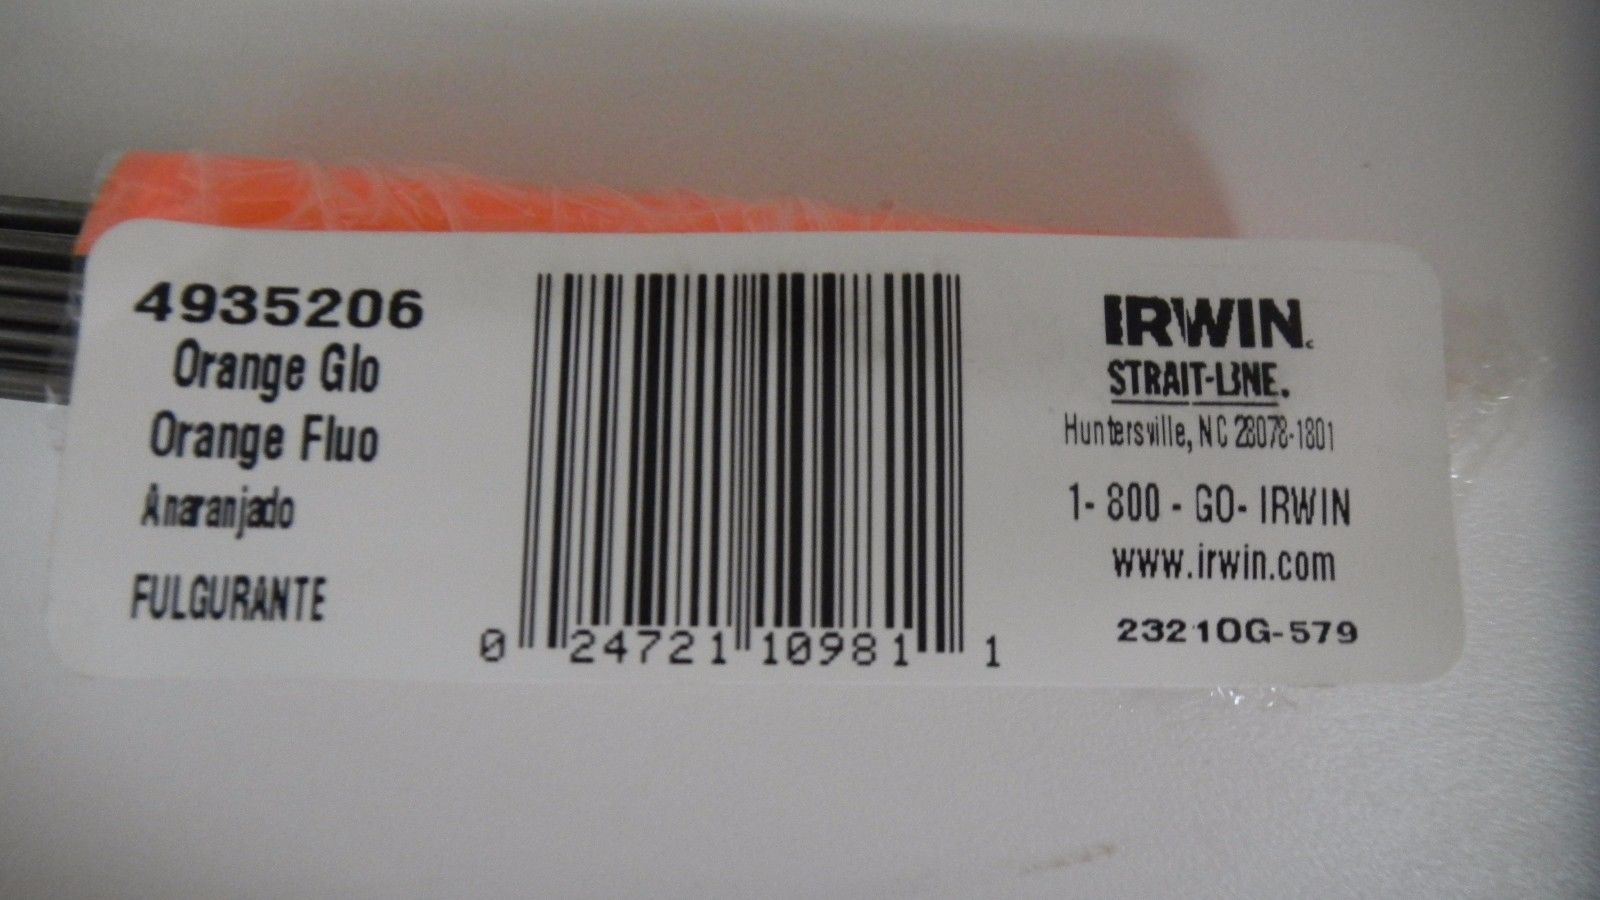 Irwin 4935206 Orange Glo Survey Stake Flags (Bundle of 25)